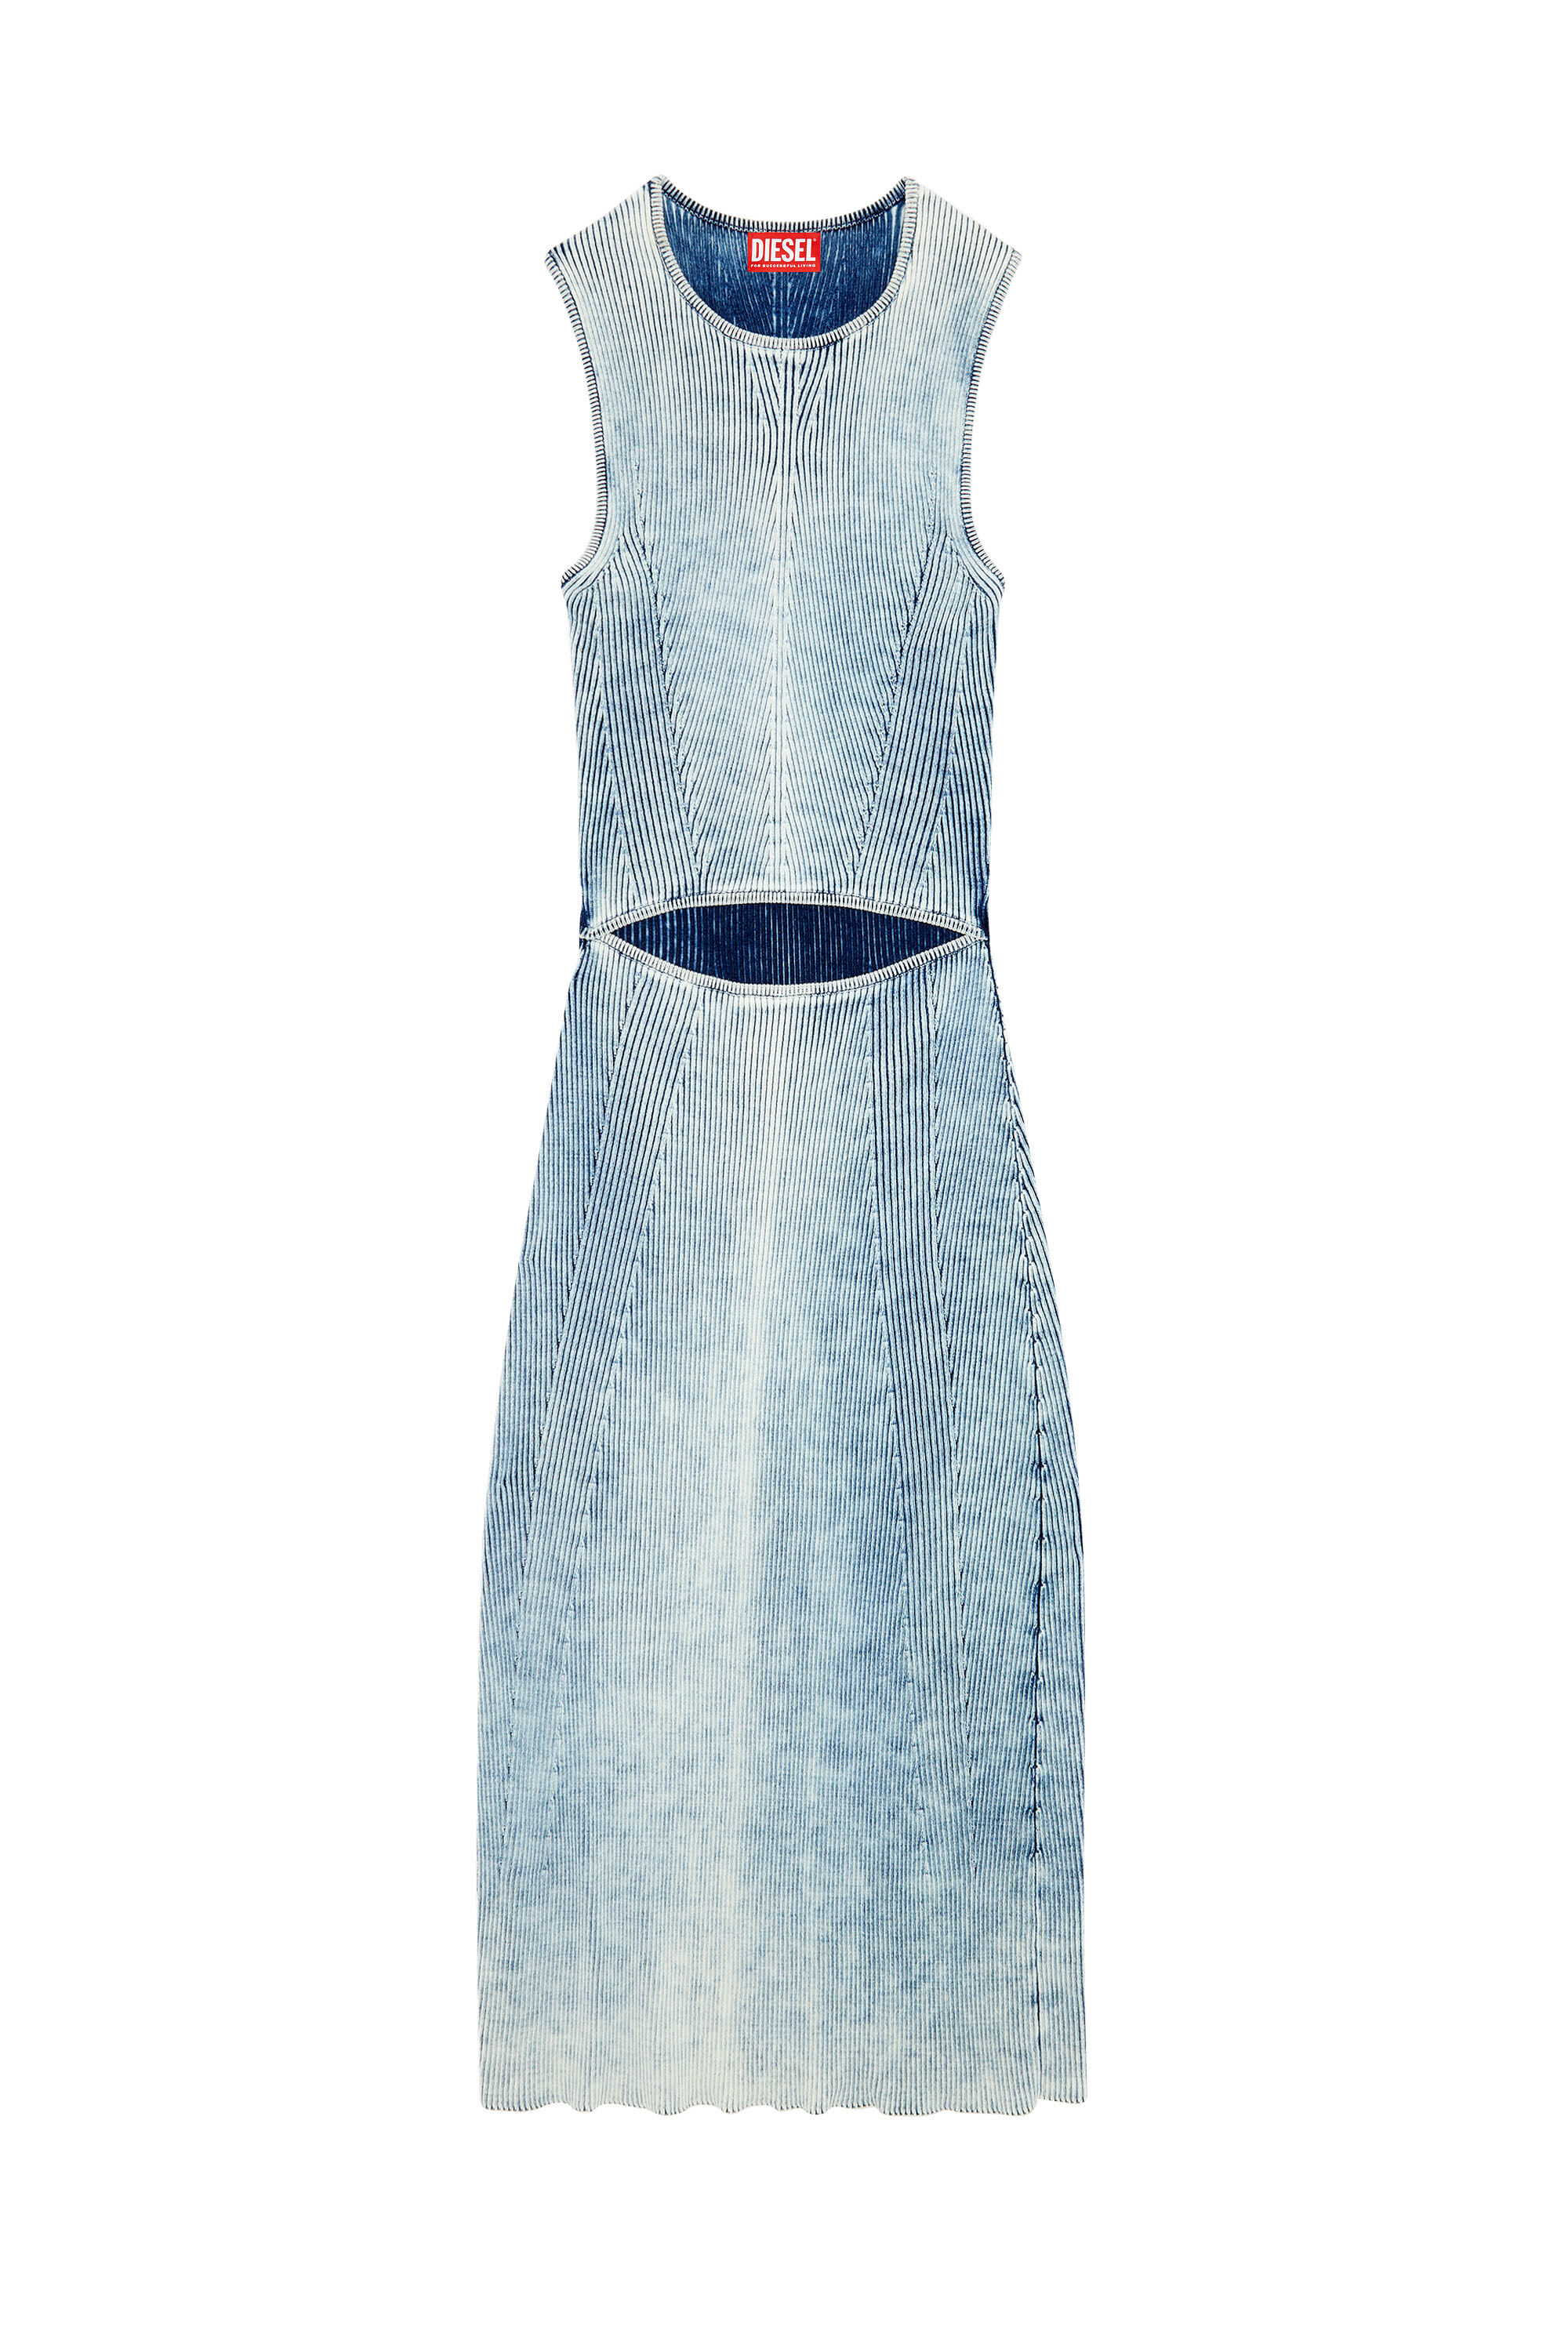 EZN Lace Dress for Women V-neck Slim Fit Sheath Dress Split Hollow Out  Mid-Length Ladies Dress 3812